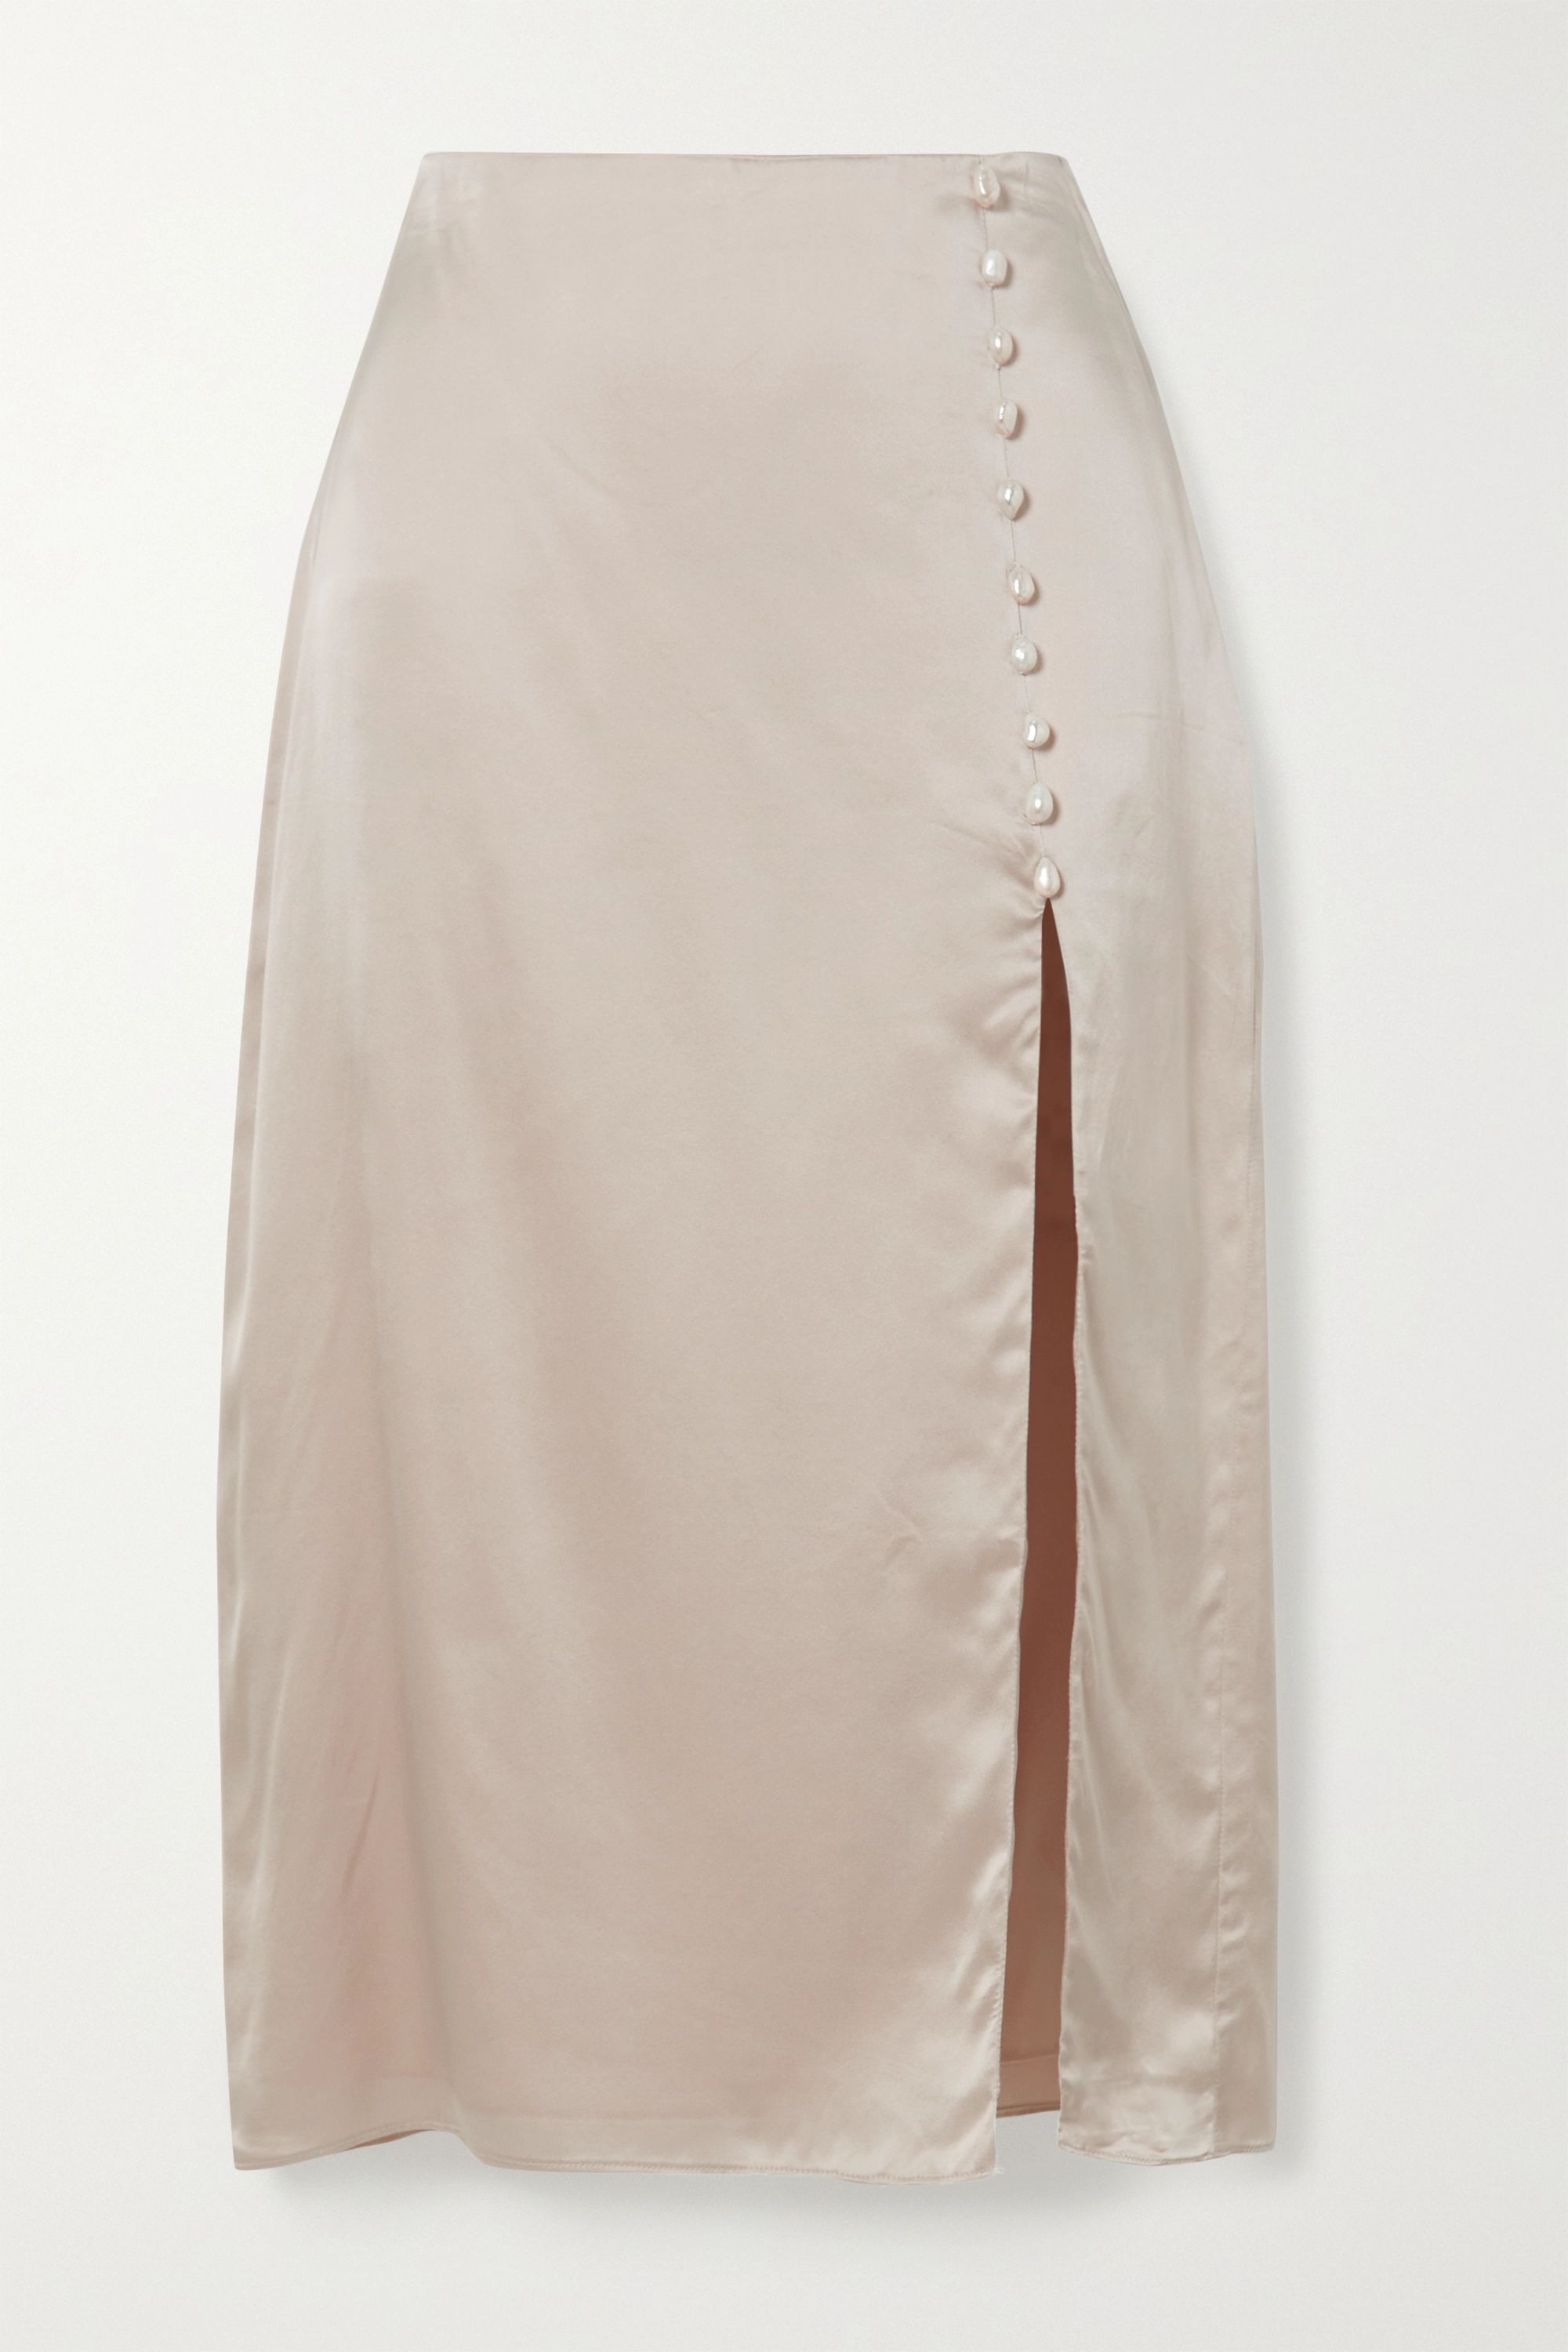 Cami Nyc The Kalanni Embellished Silk-Charmeuse Midi Skirt